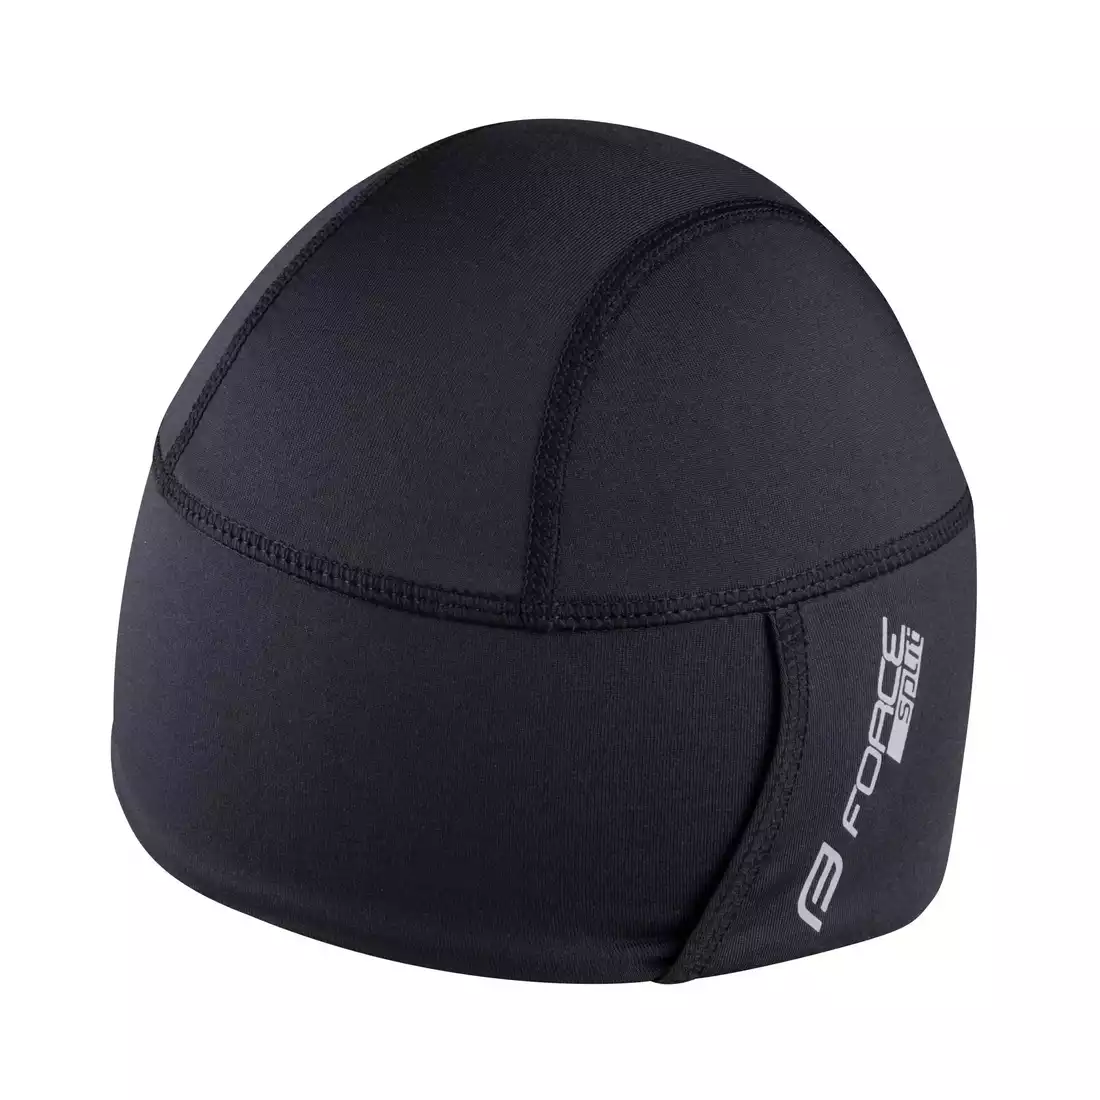 FORCE SPLIT helmet cap, black